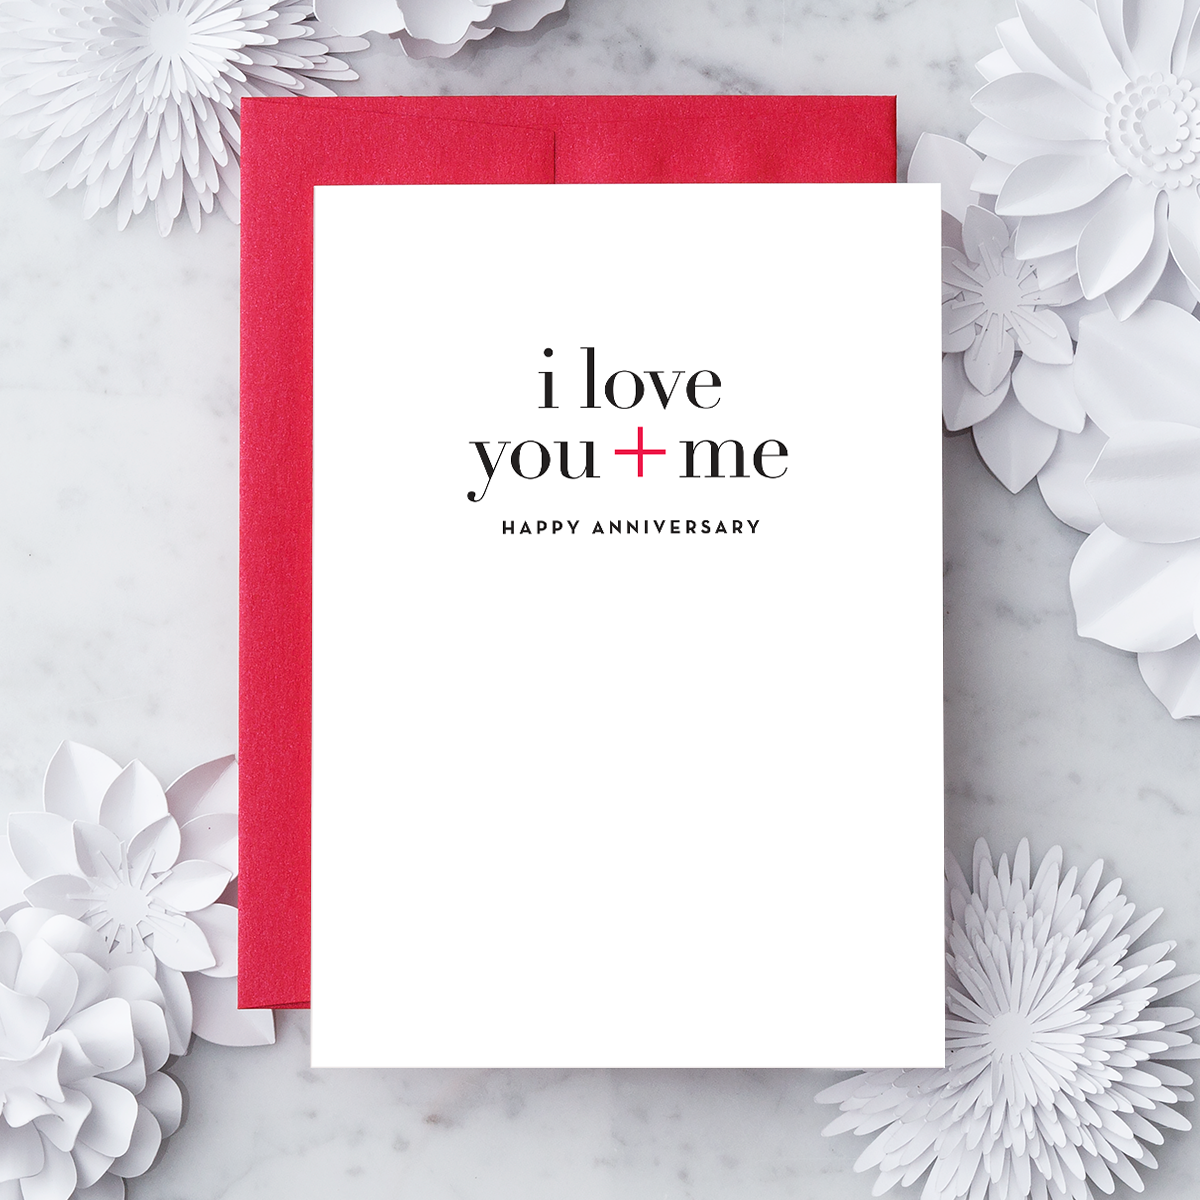 I Love You + Me Anniversary Card